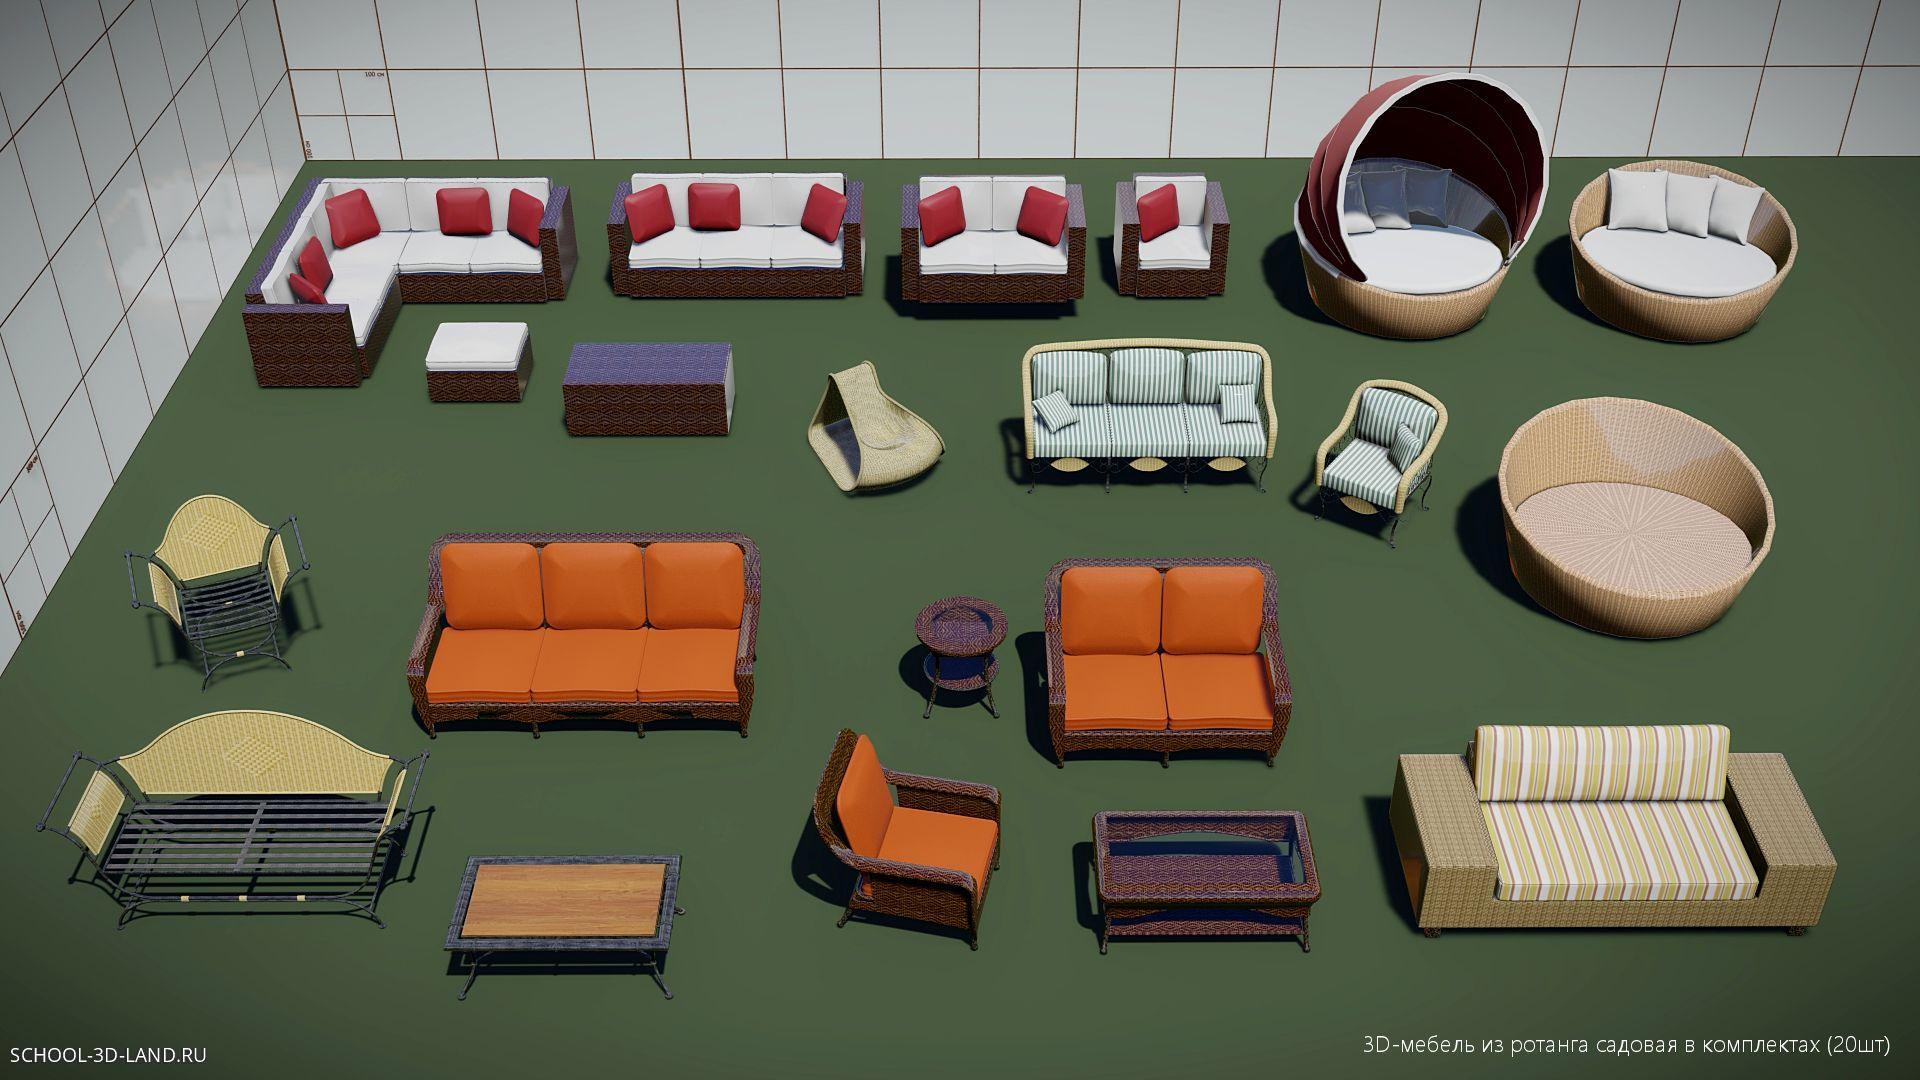 3D rattan garden furniture in sets (20pcs)